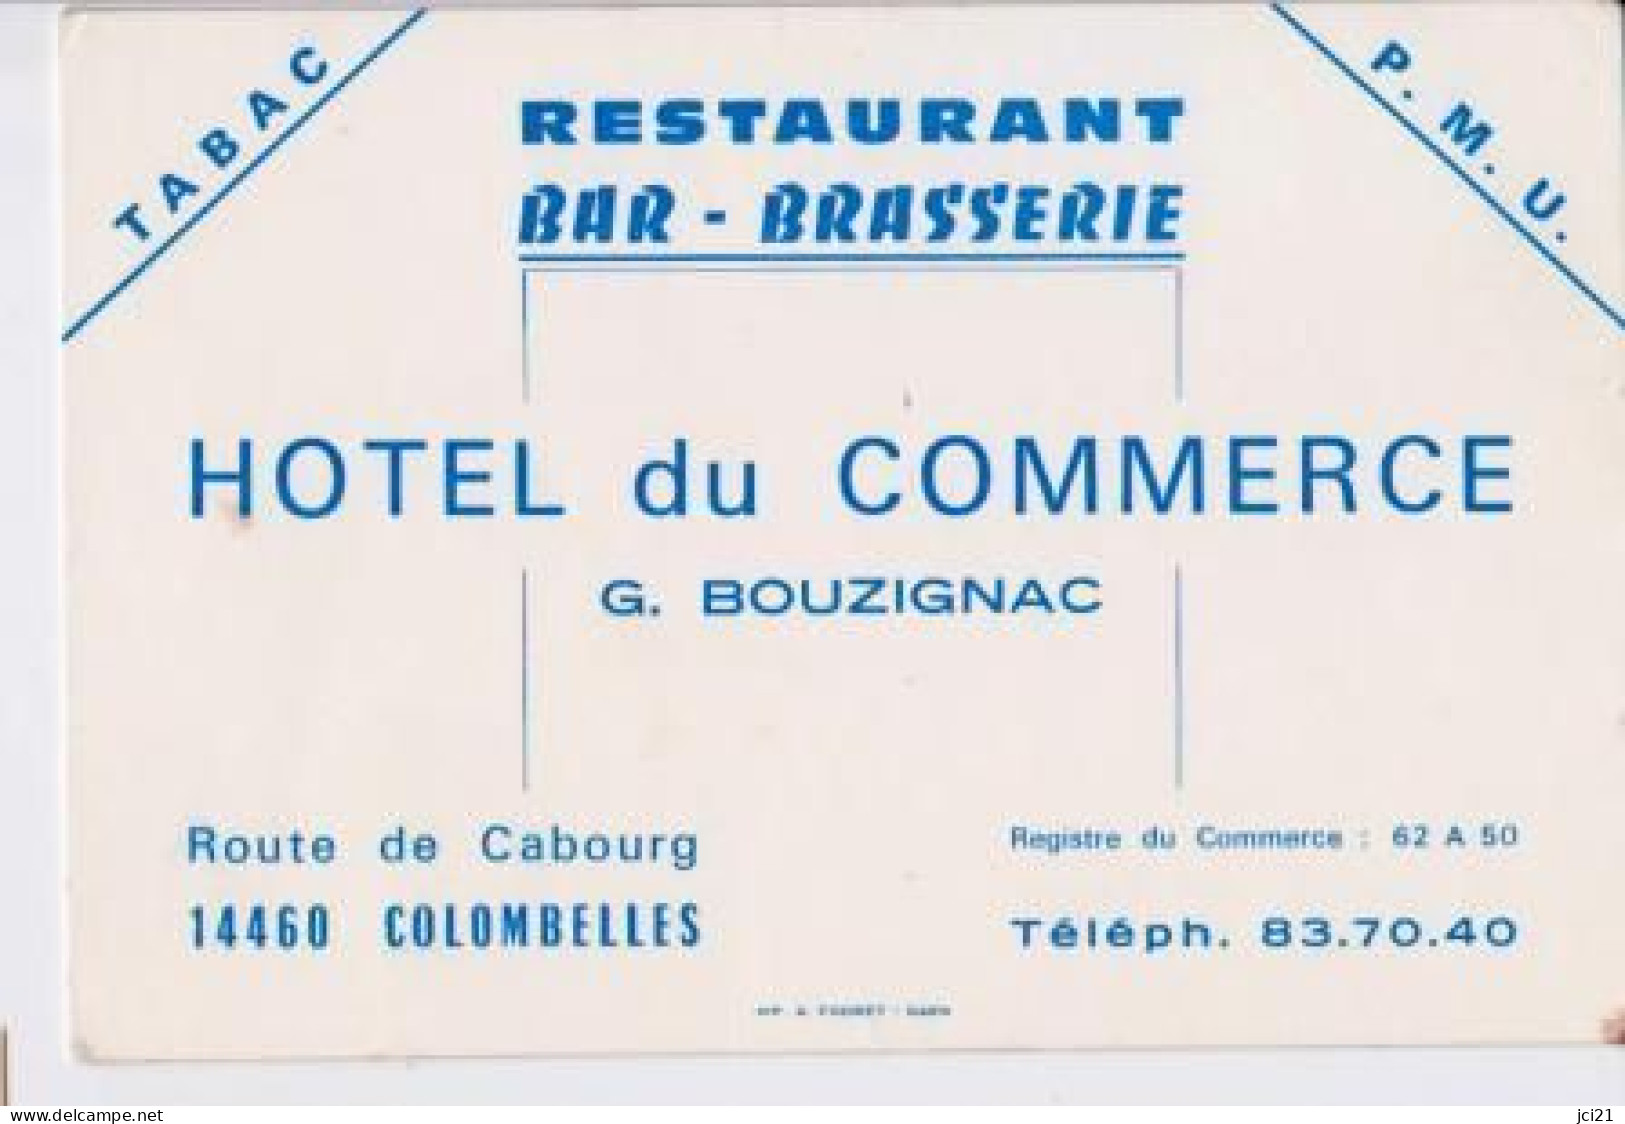 Restaurant Bar Brasserie Hôtel Du Commerce G.BOUZIGNAC 14460 COLOMBELLES _CV99 - Cartoncini Da Visita